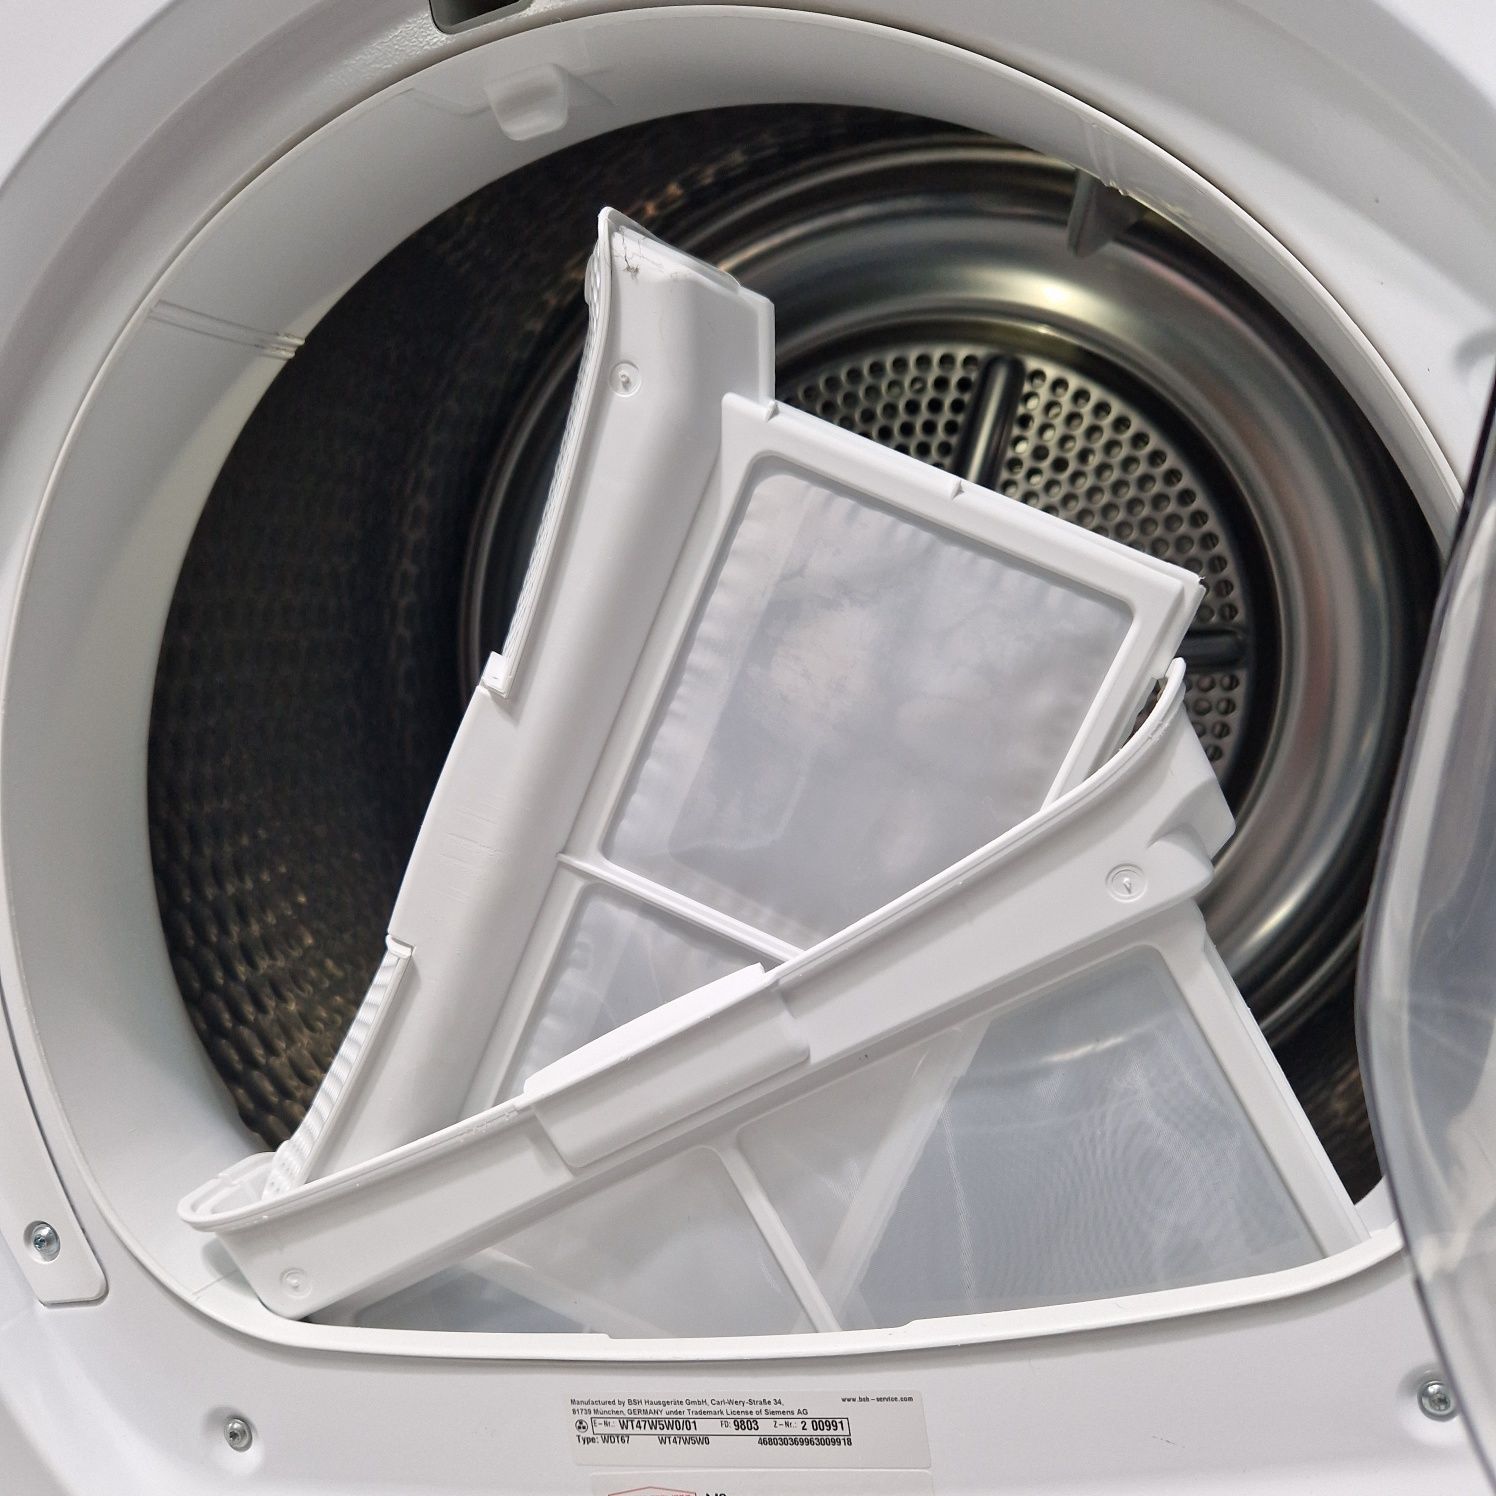 ТОП!!!2020 рік /  Комплект Siemens Iq700/пральна+сушильна машина